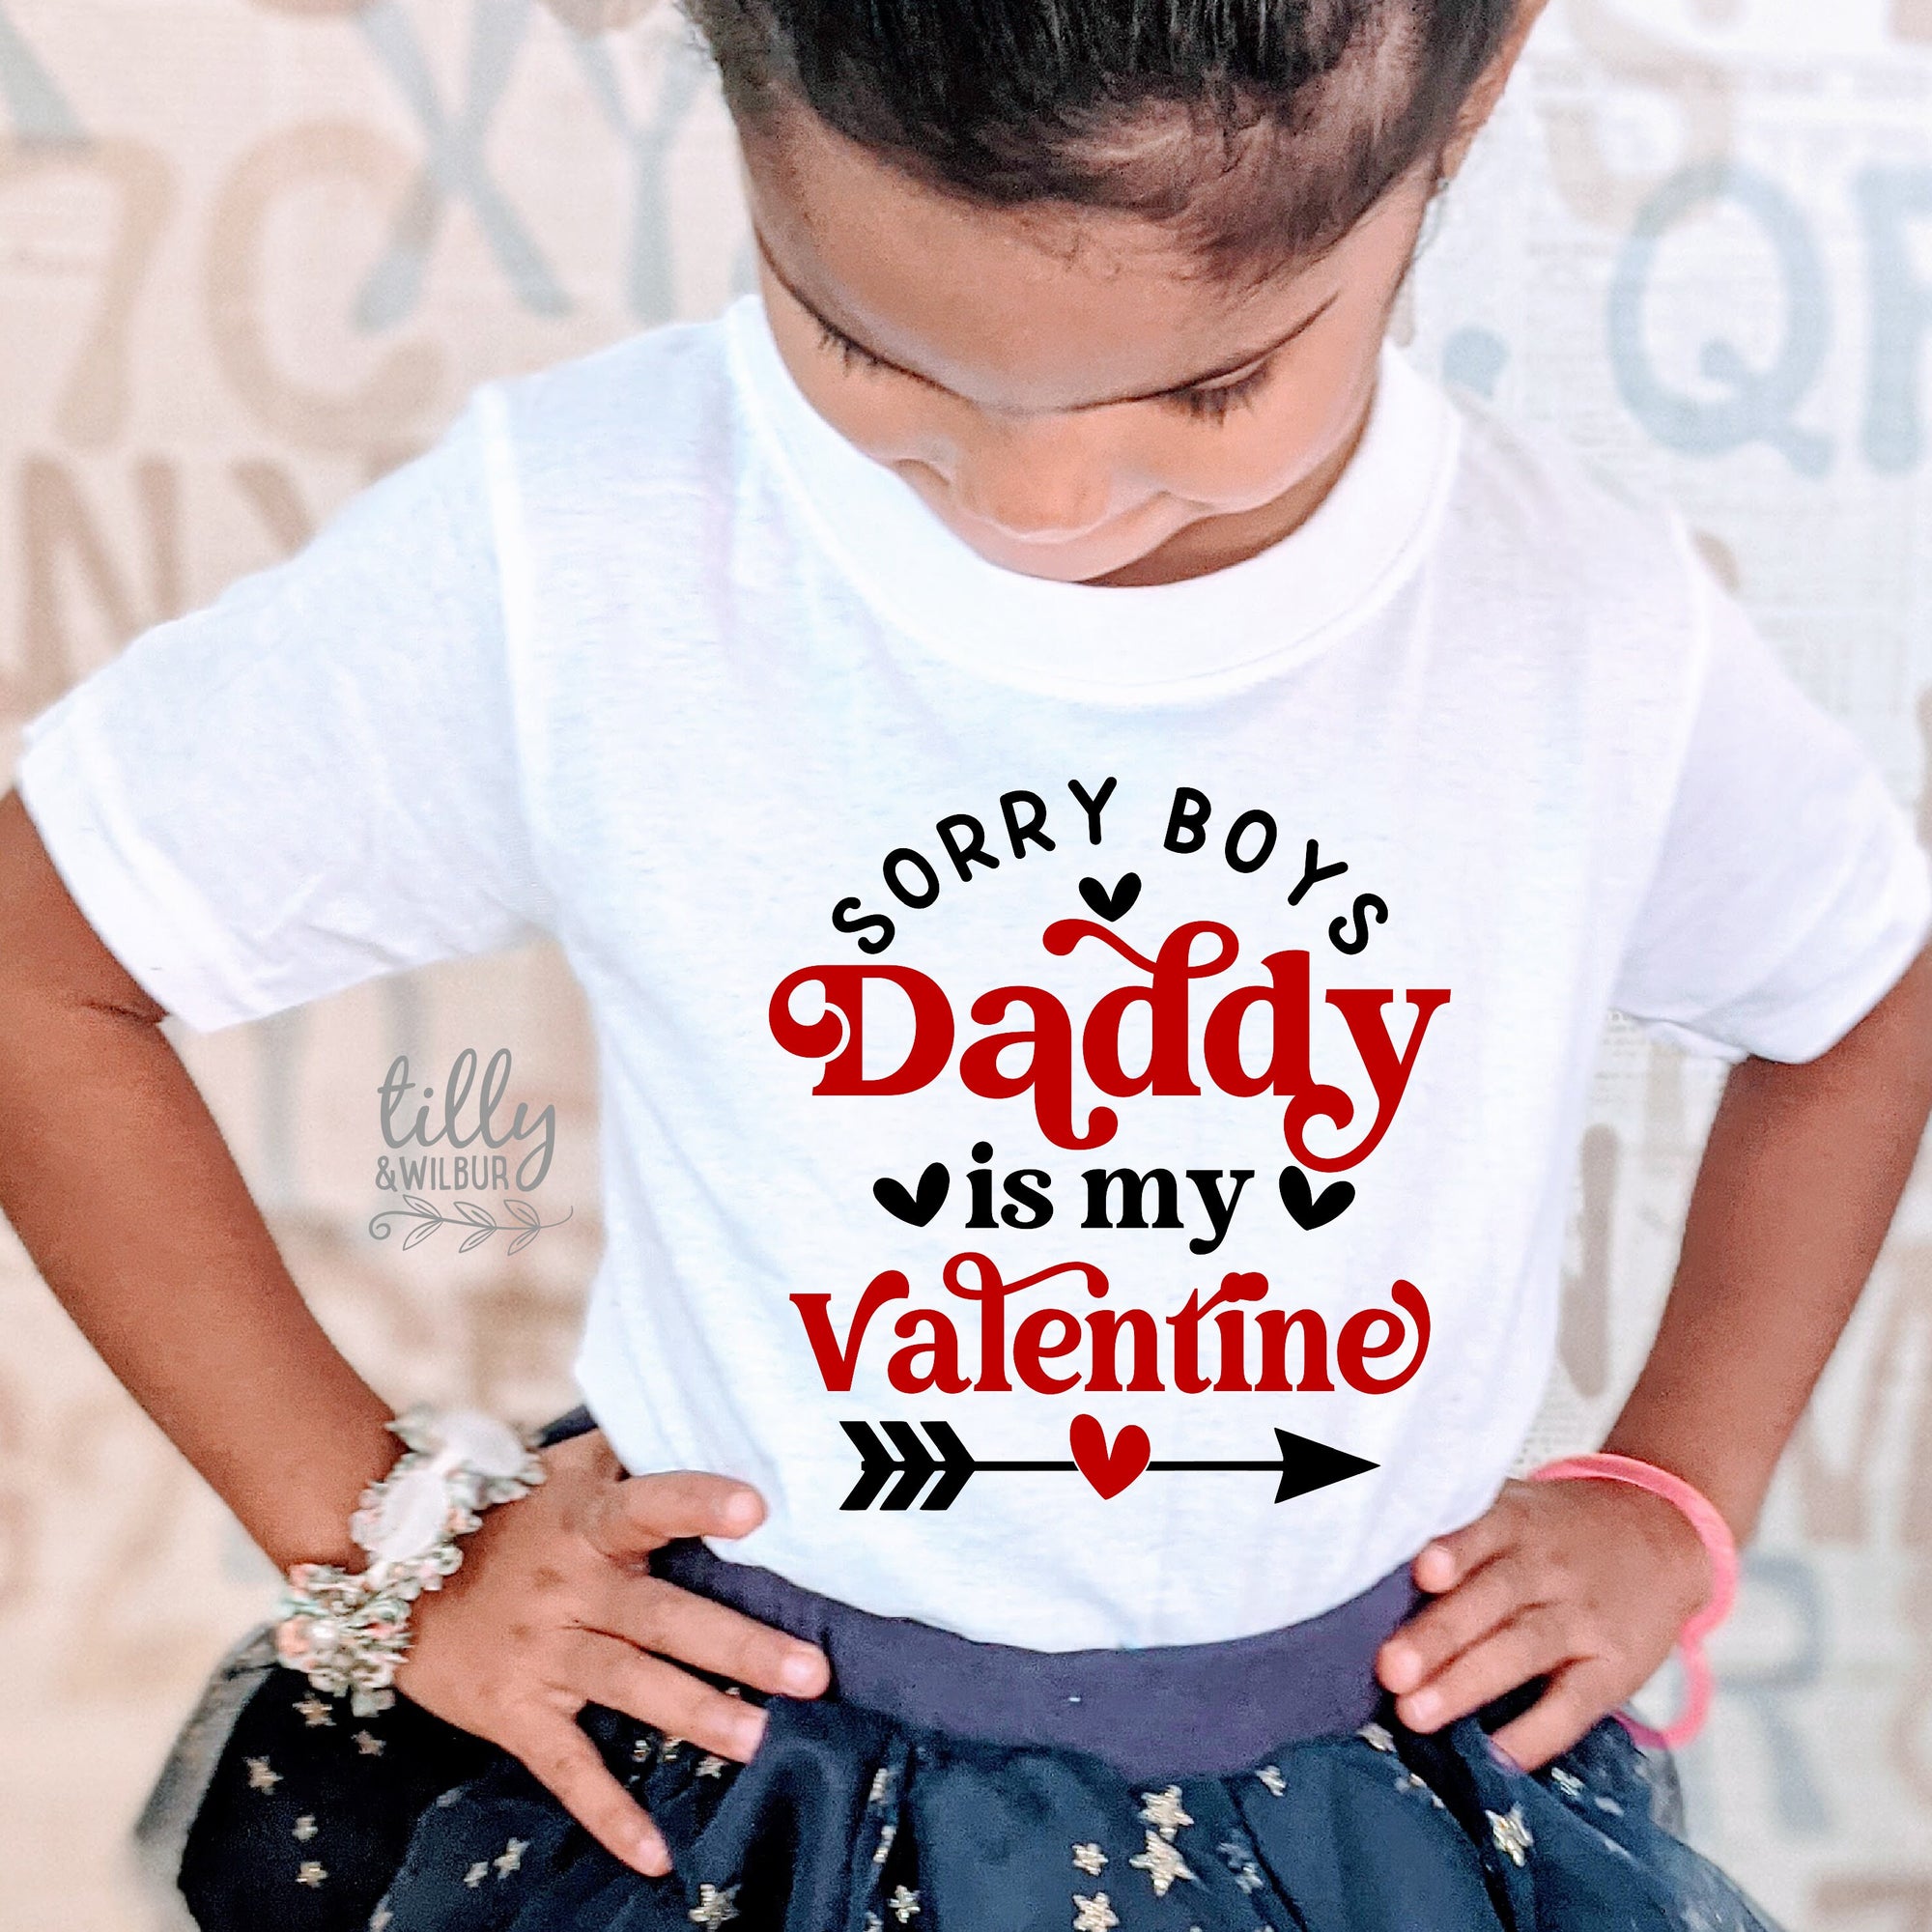 Sorry Boys Daddy Is My Valentine T-Shirt, Daddy's Little Valentine T-Shirt, Valentine's Day T-Shirt, Daughter Valentine's Day Gift, Dad Gift